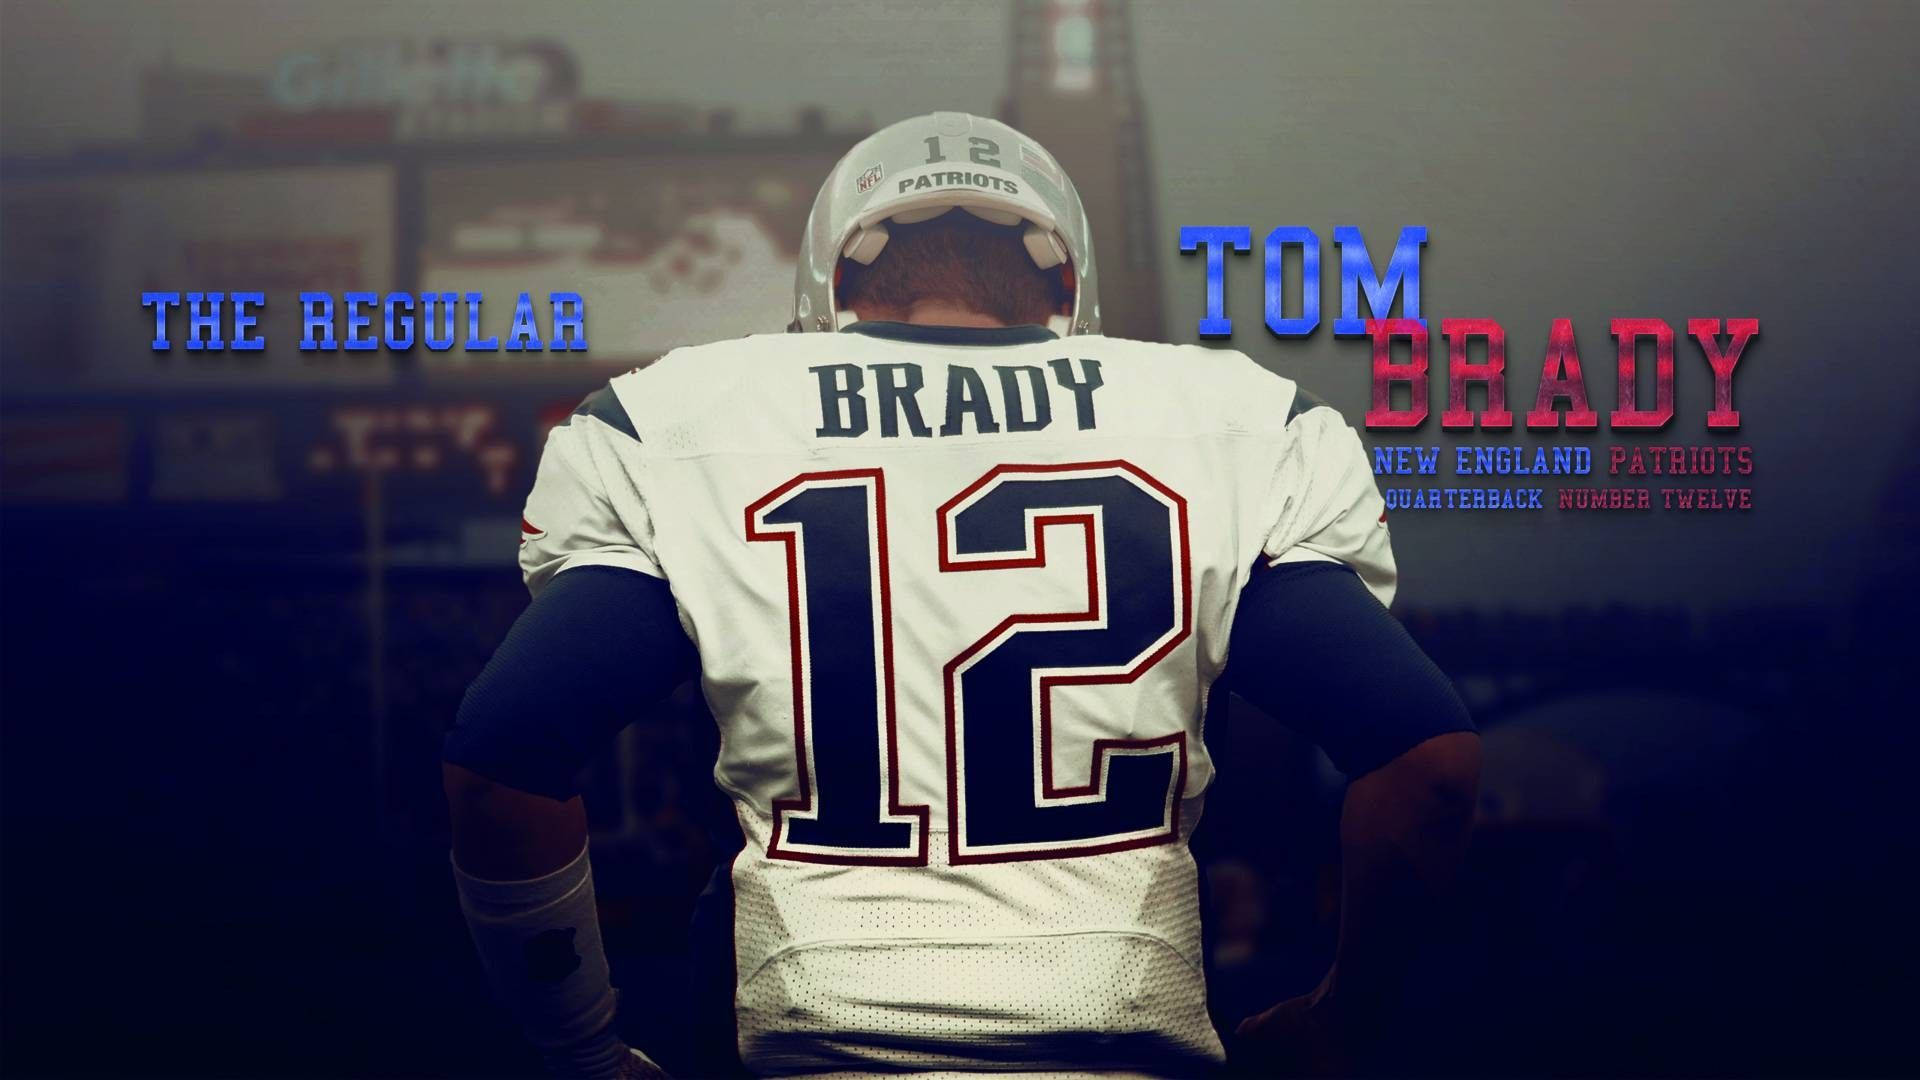 Tom Brady Wallpapers